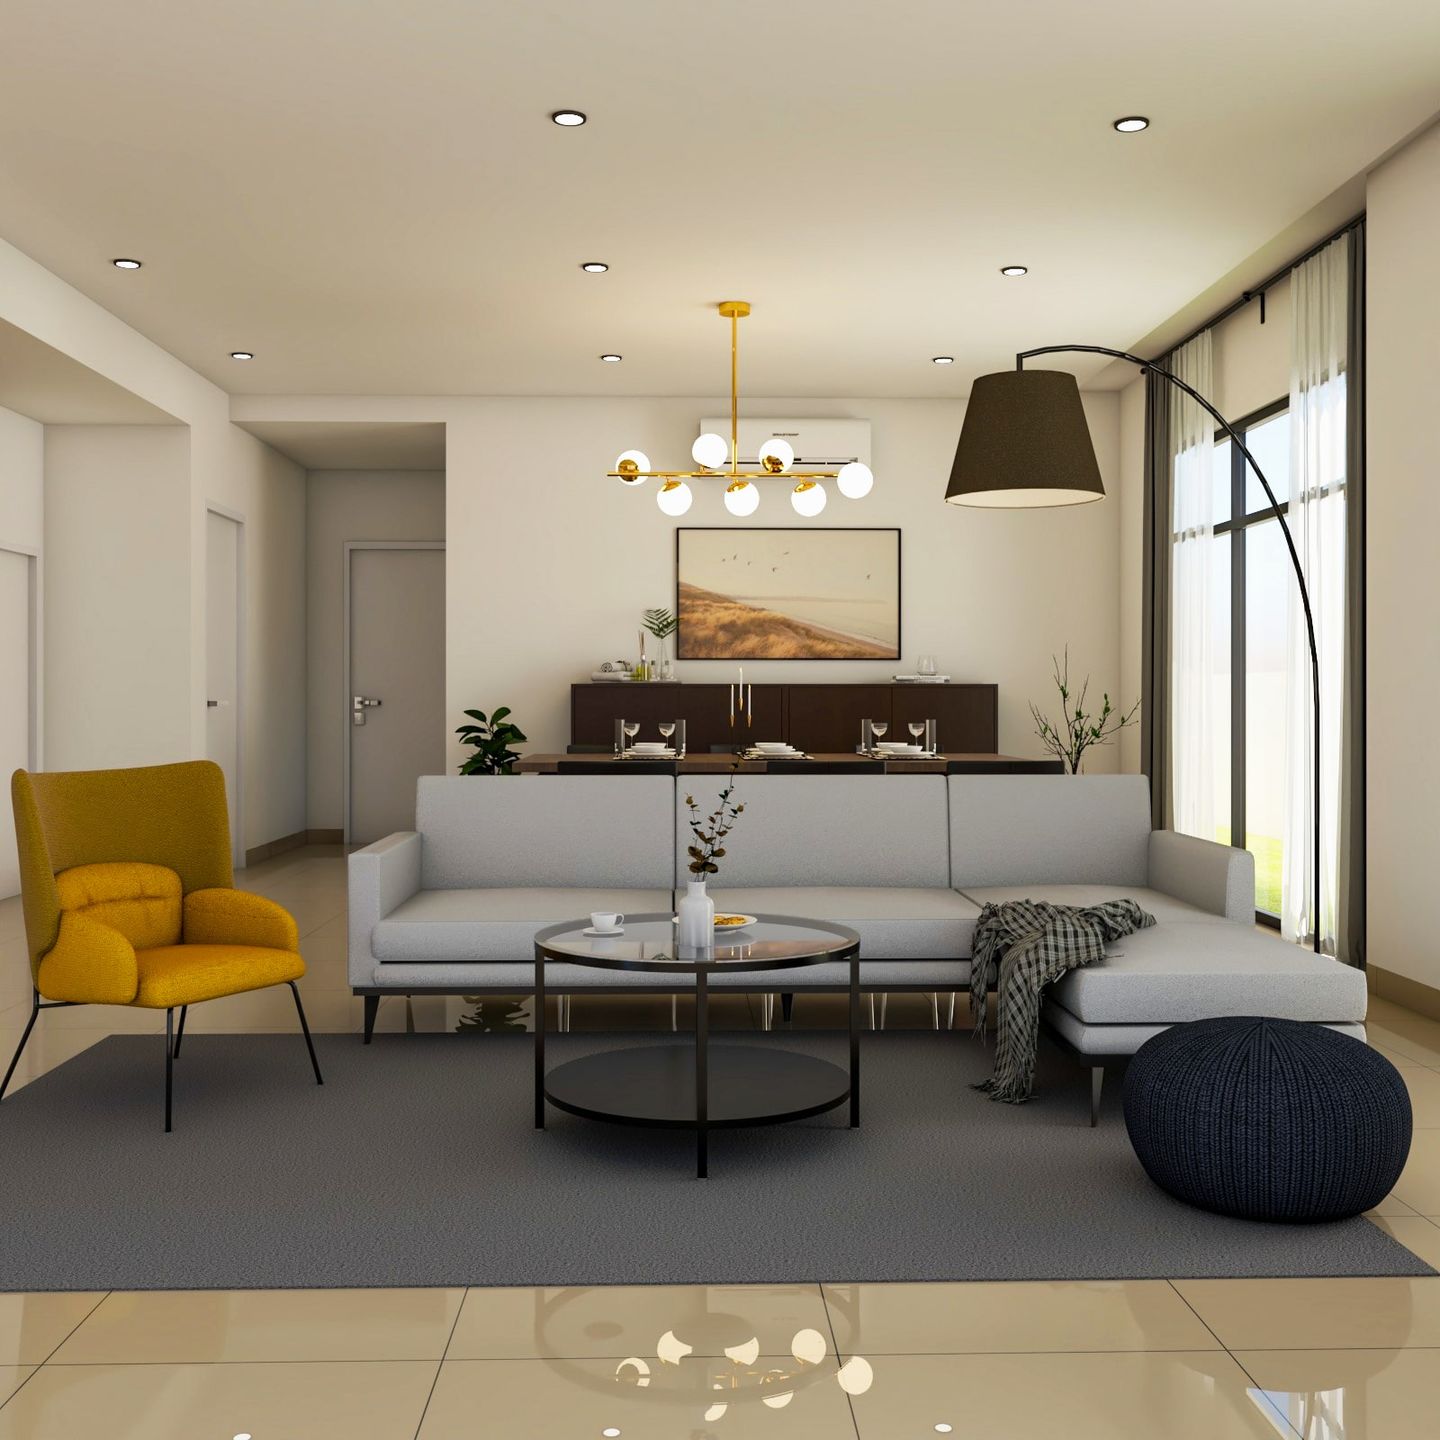 Living Room Design With Multicoloured Furniture - Livspace